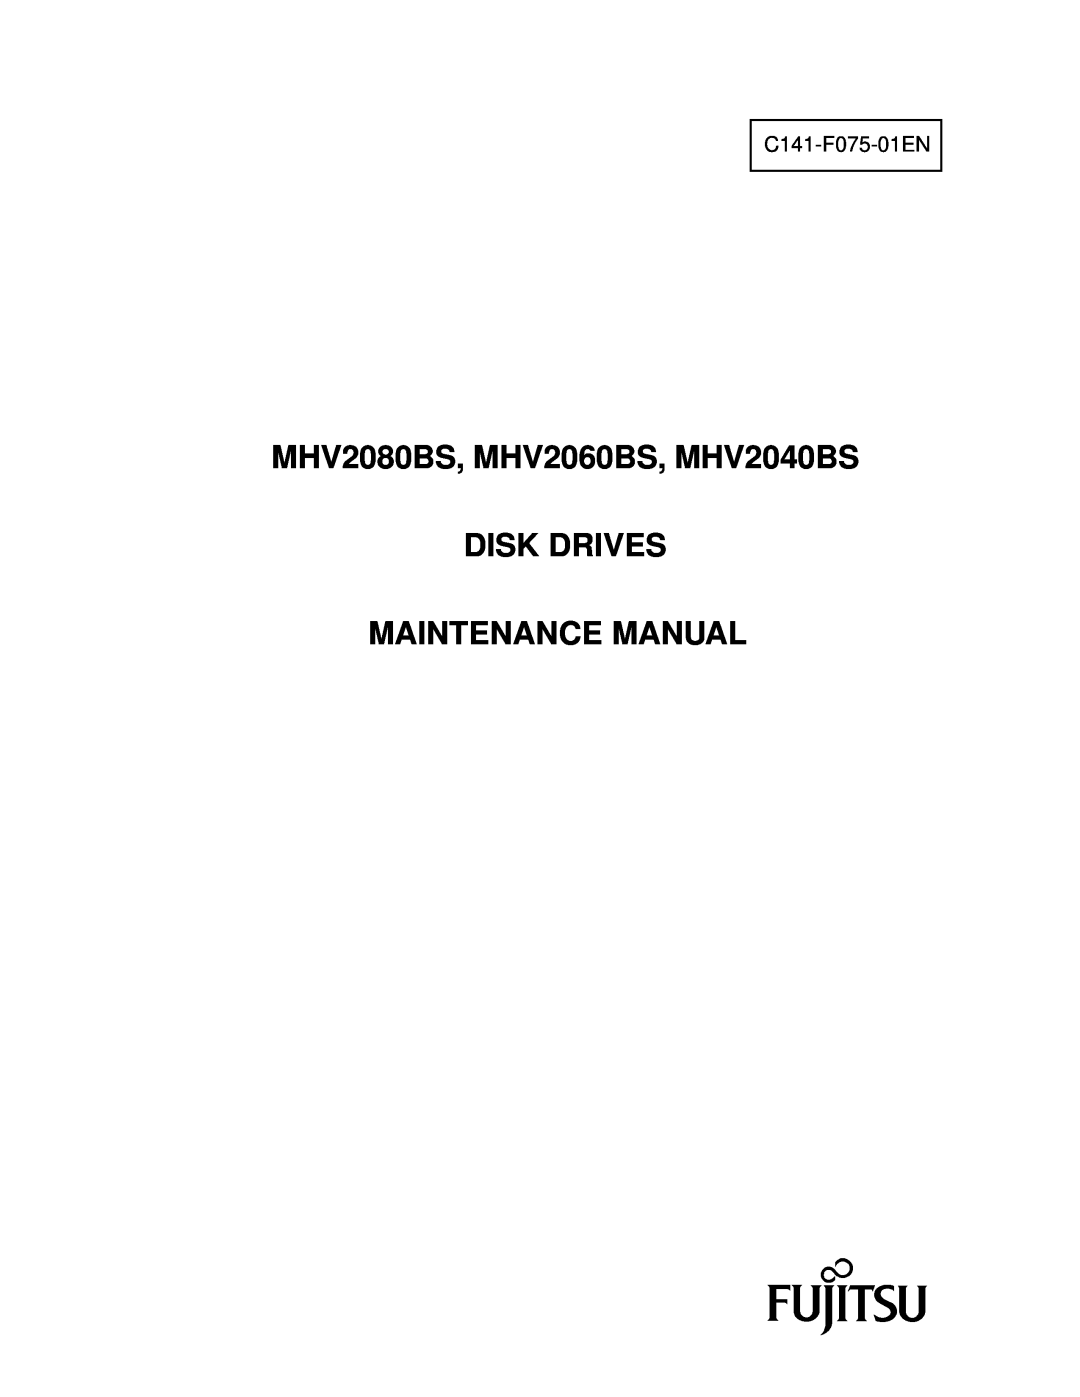 Fujitsu manual MHV2080BS, MHV2060BS, MHV2040BS DISK DRIVES MAINTENANCE MANUAL, C141-F075-01EN 